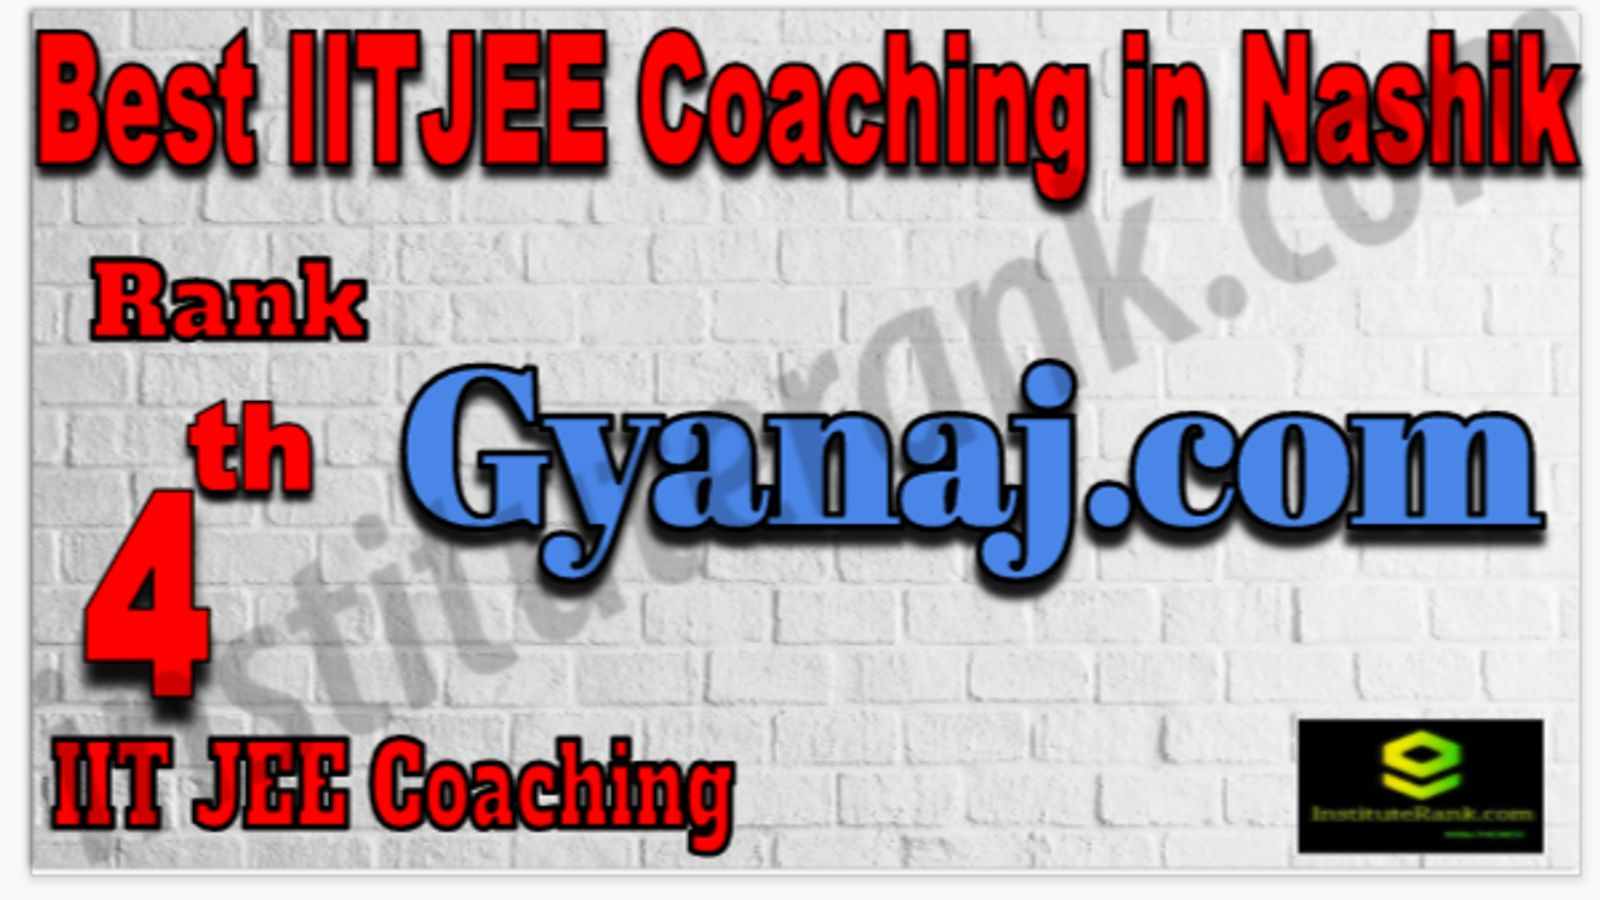 Rank 4 Best IIT NEET Coaching in Nashik